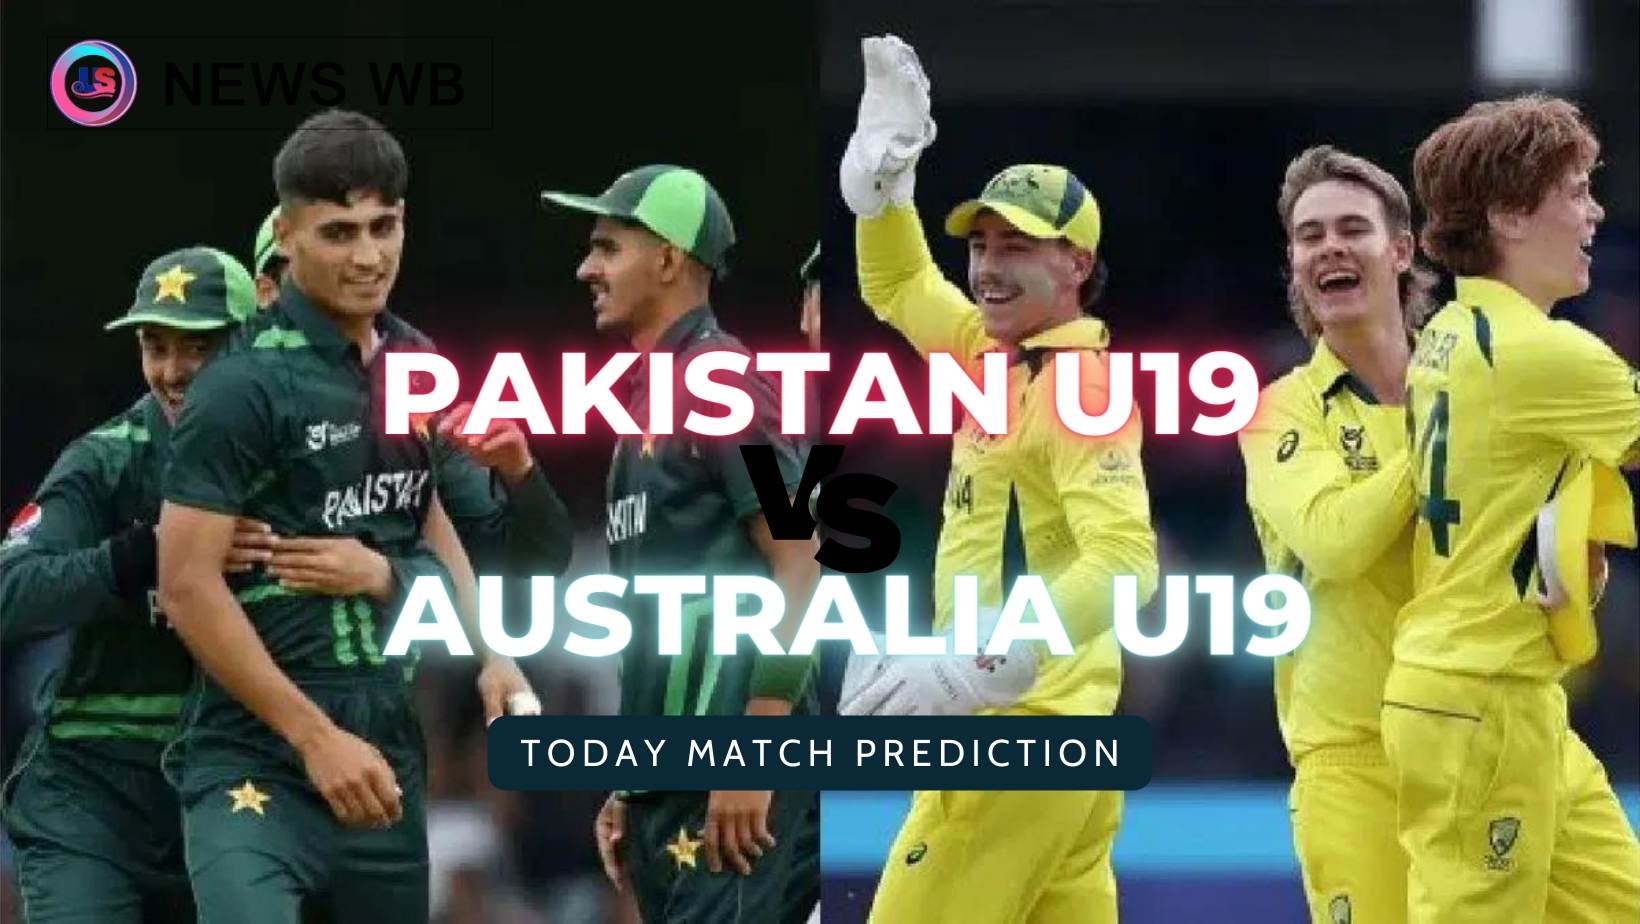 Today Match Prediction: AUS U19 vs PAK U19 Dream11 Team, Australia U19 vs Pakistan U19 Semi-Final 2, Who Will Win?